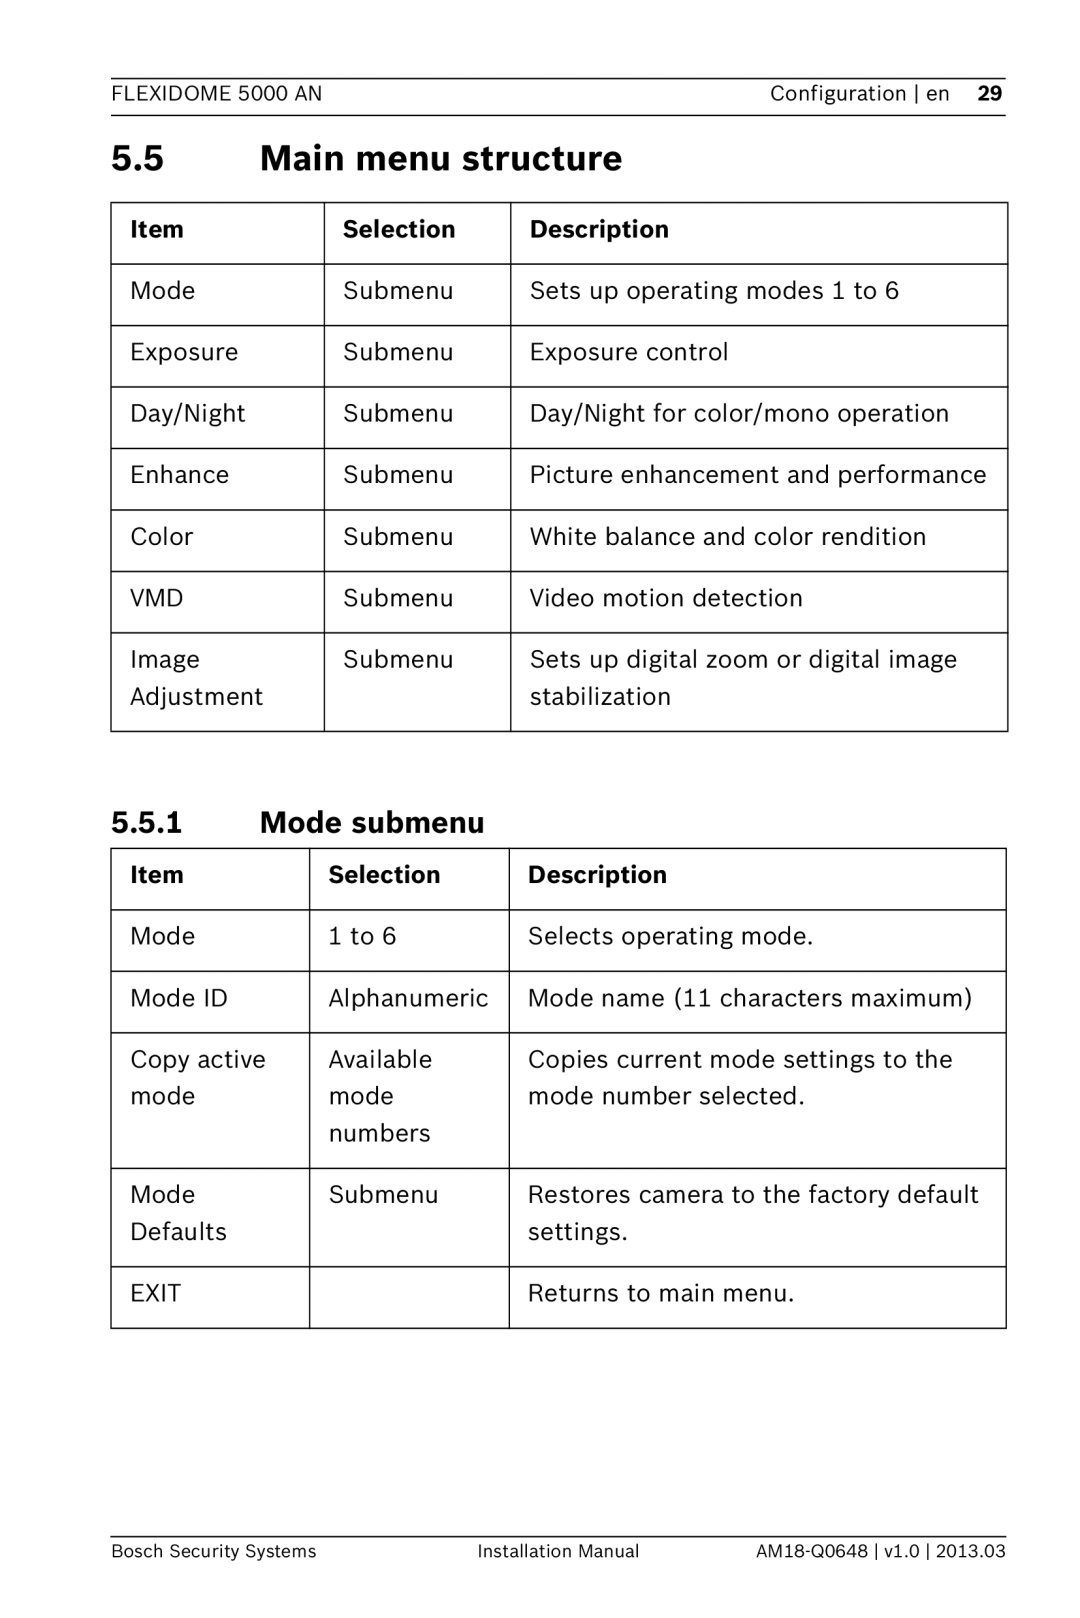 Bosch Appliances AN, 5000 installation manual 5.5Main menu structure, 5.5.1Mode submenu, Selection, Description 